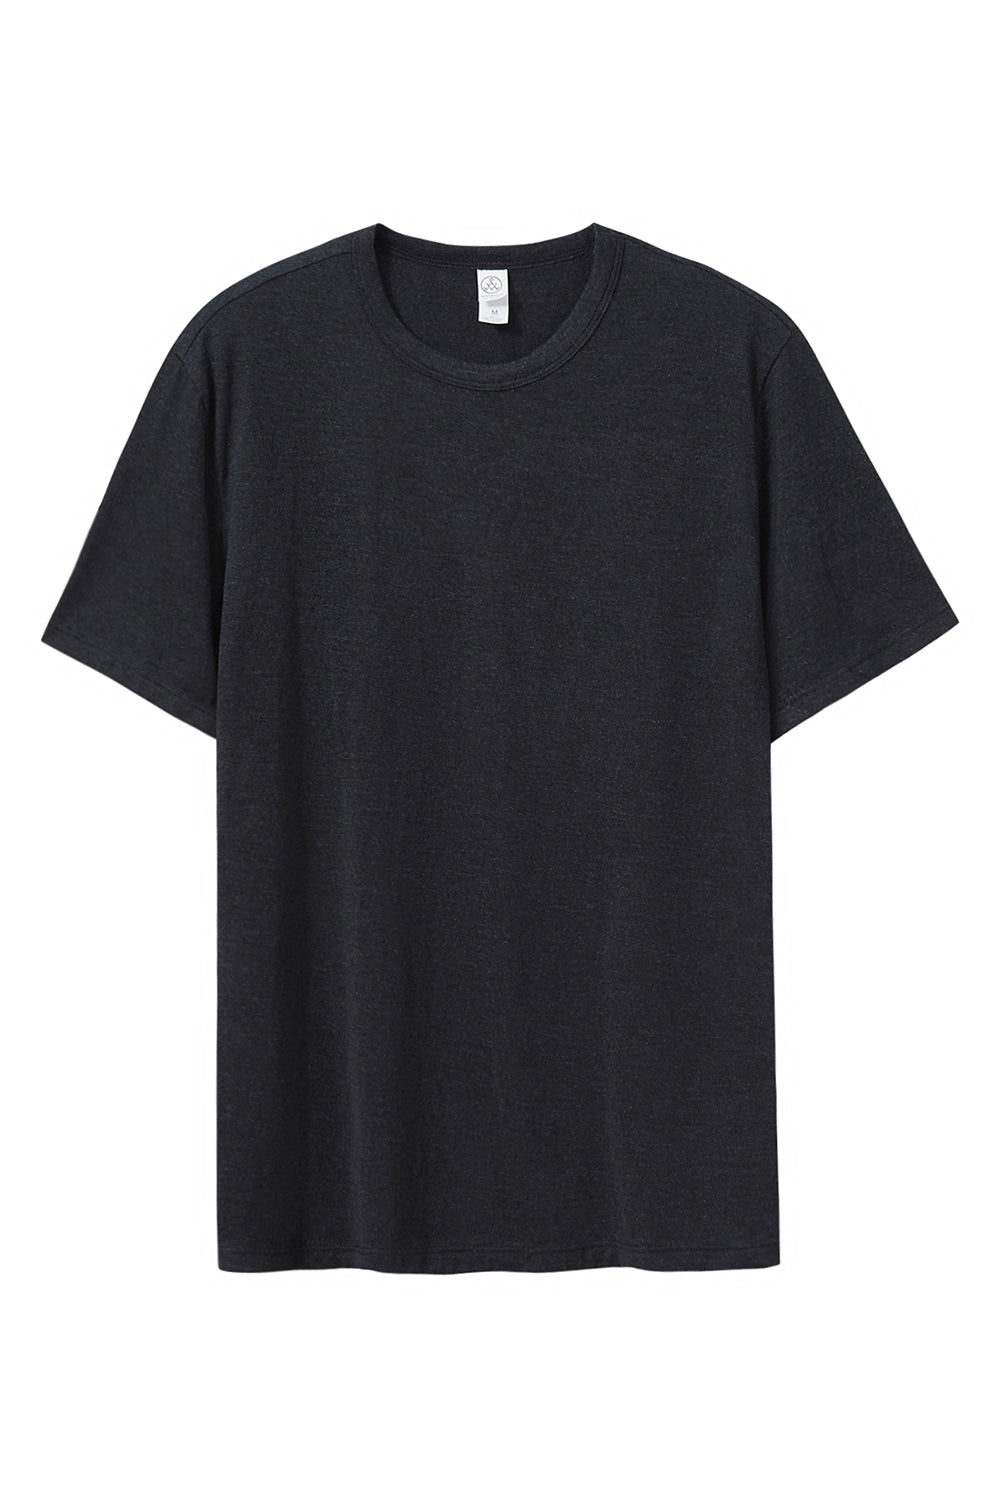 Alternative 4400HM Mens Modal Short Sleeve Crewneck T-Shirt Black Flat Front